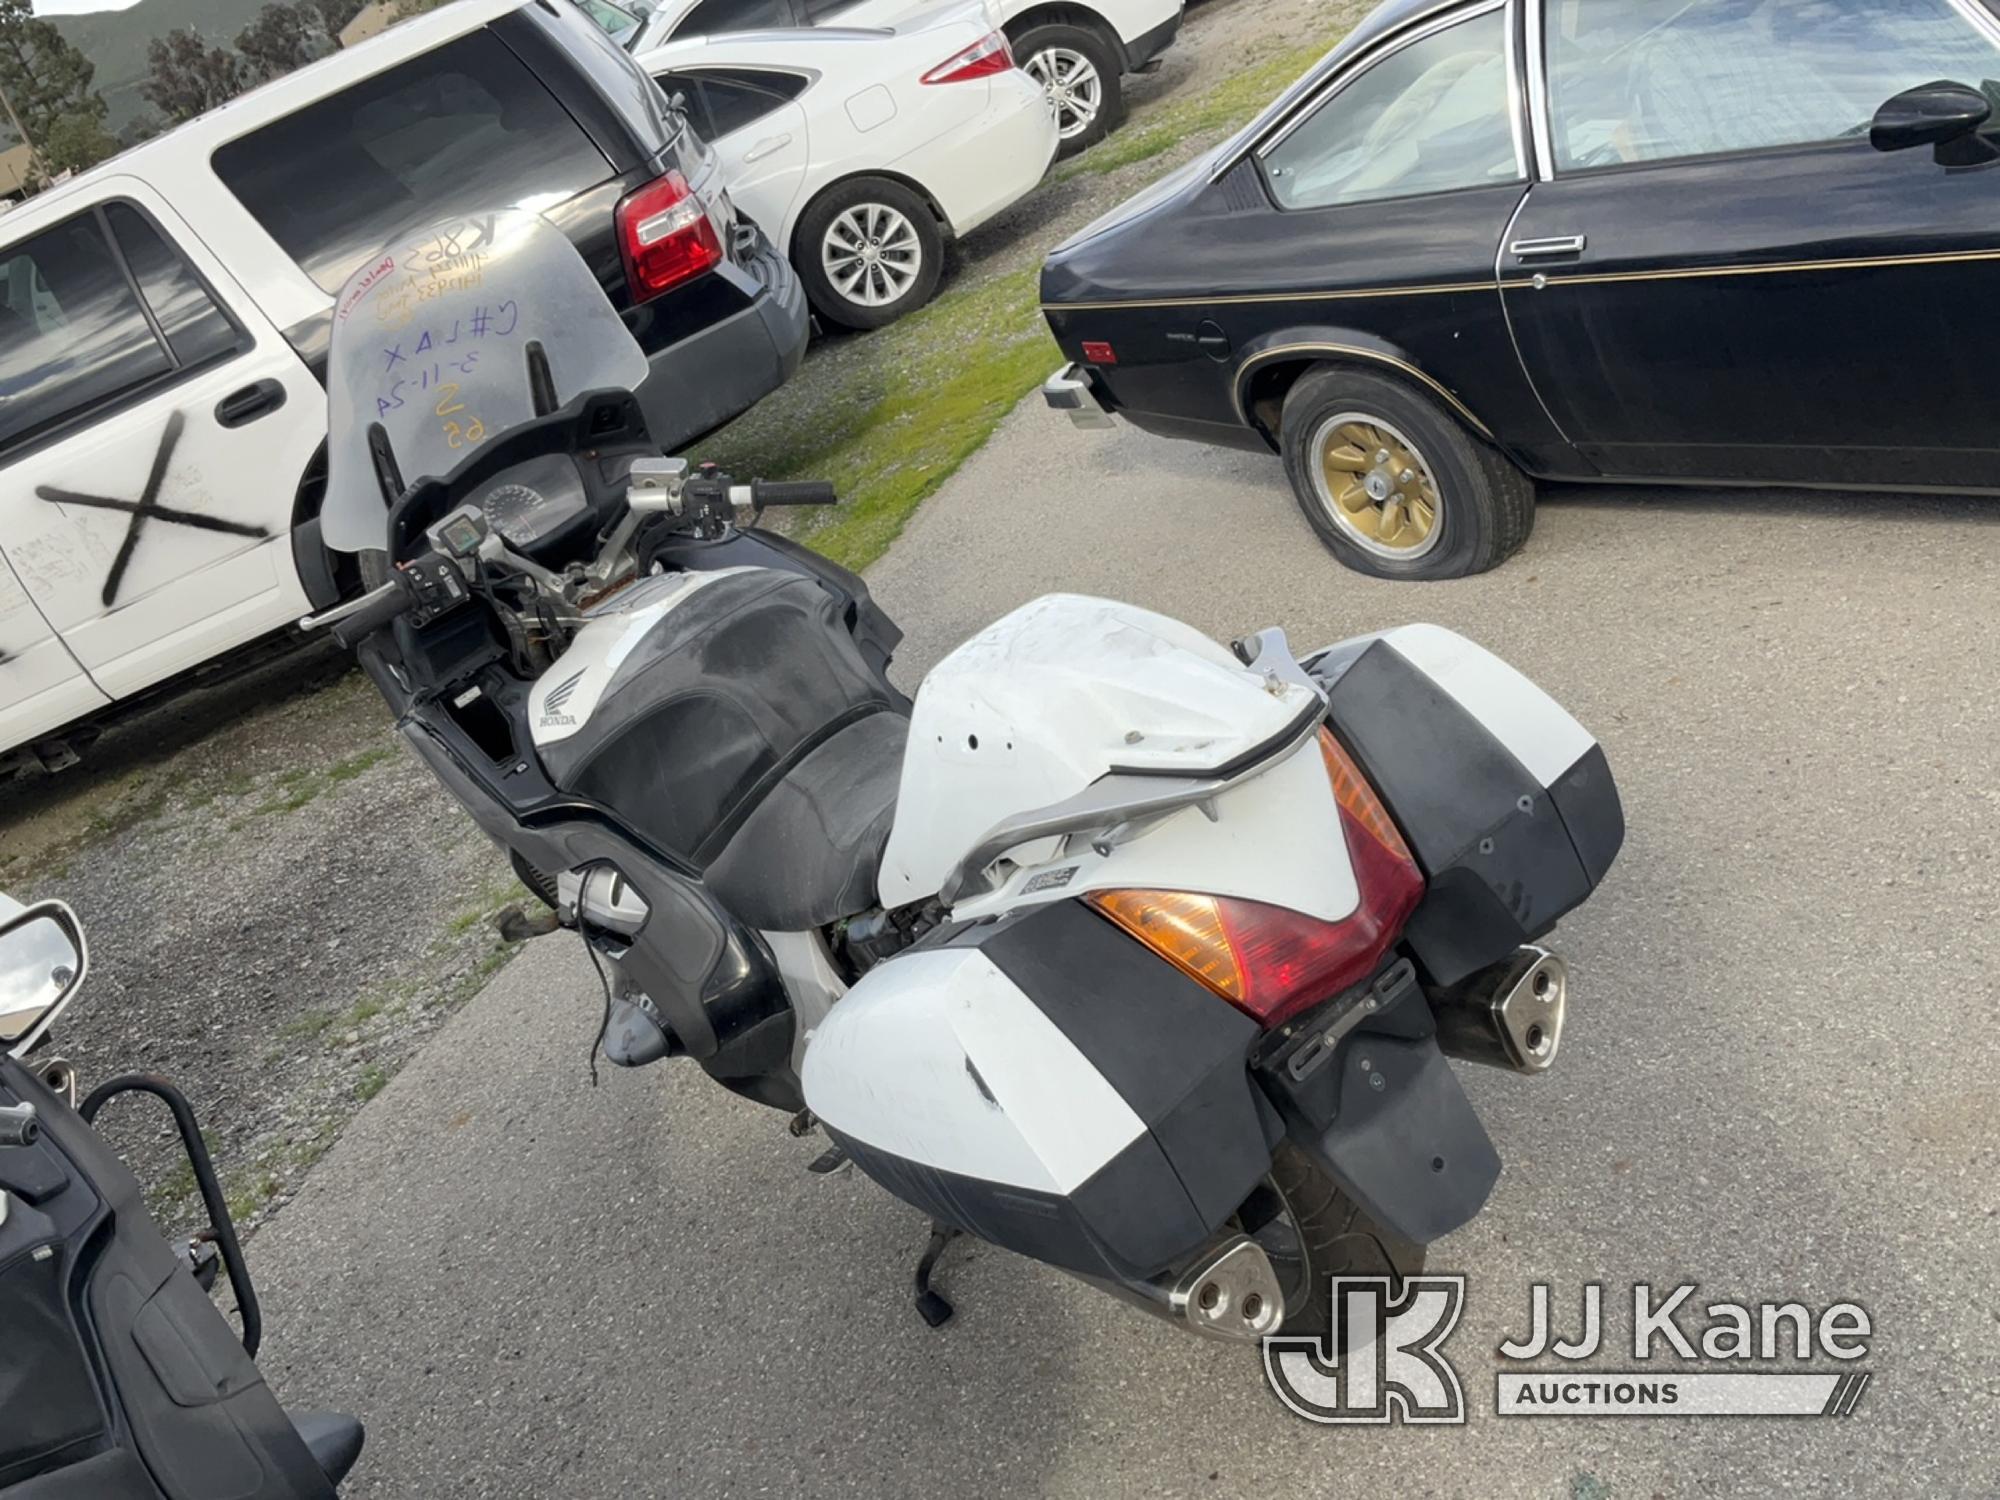 (Jurupa Valley, CA) 2014 Honda ST1300PA Motorcycle Not Running , No Key, Stripped Of Parts , Wrecked